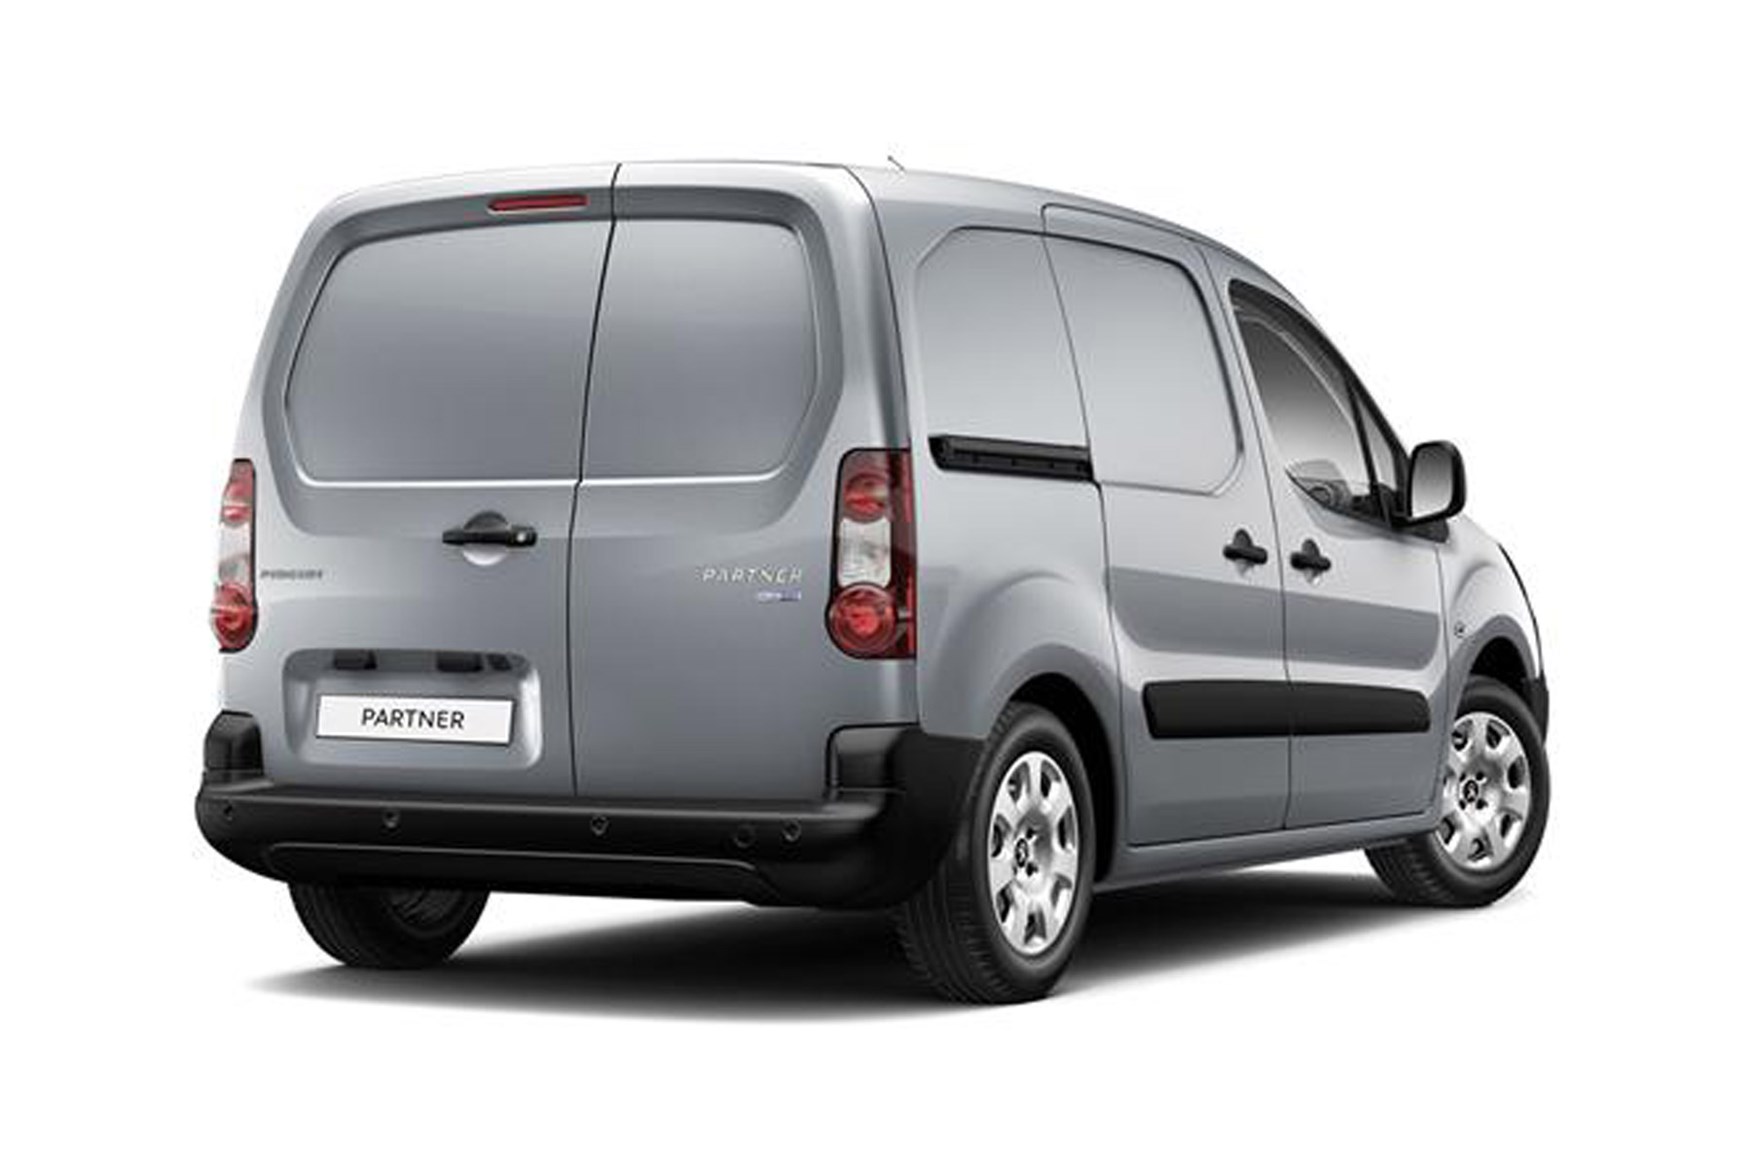 Peugeot Partner full review on Parkers Vans - 2015 facelift rear exterior